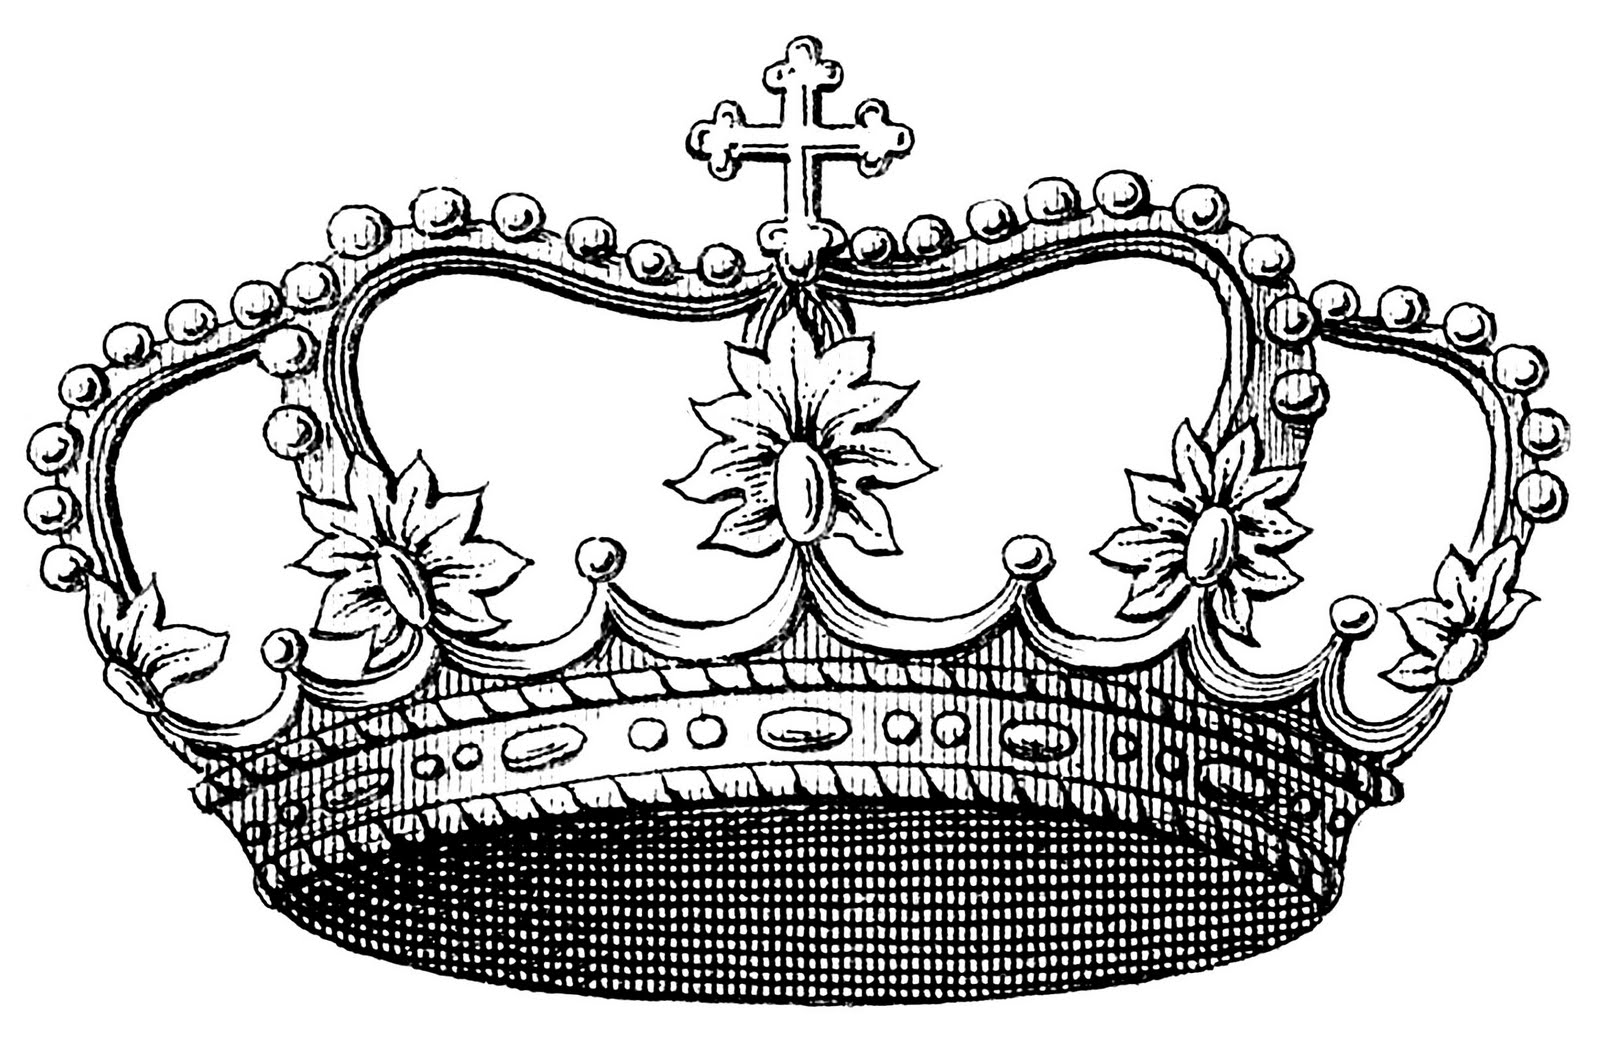 Vintage Clip Art Image - Delicate Princess Crown - The ...